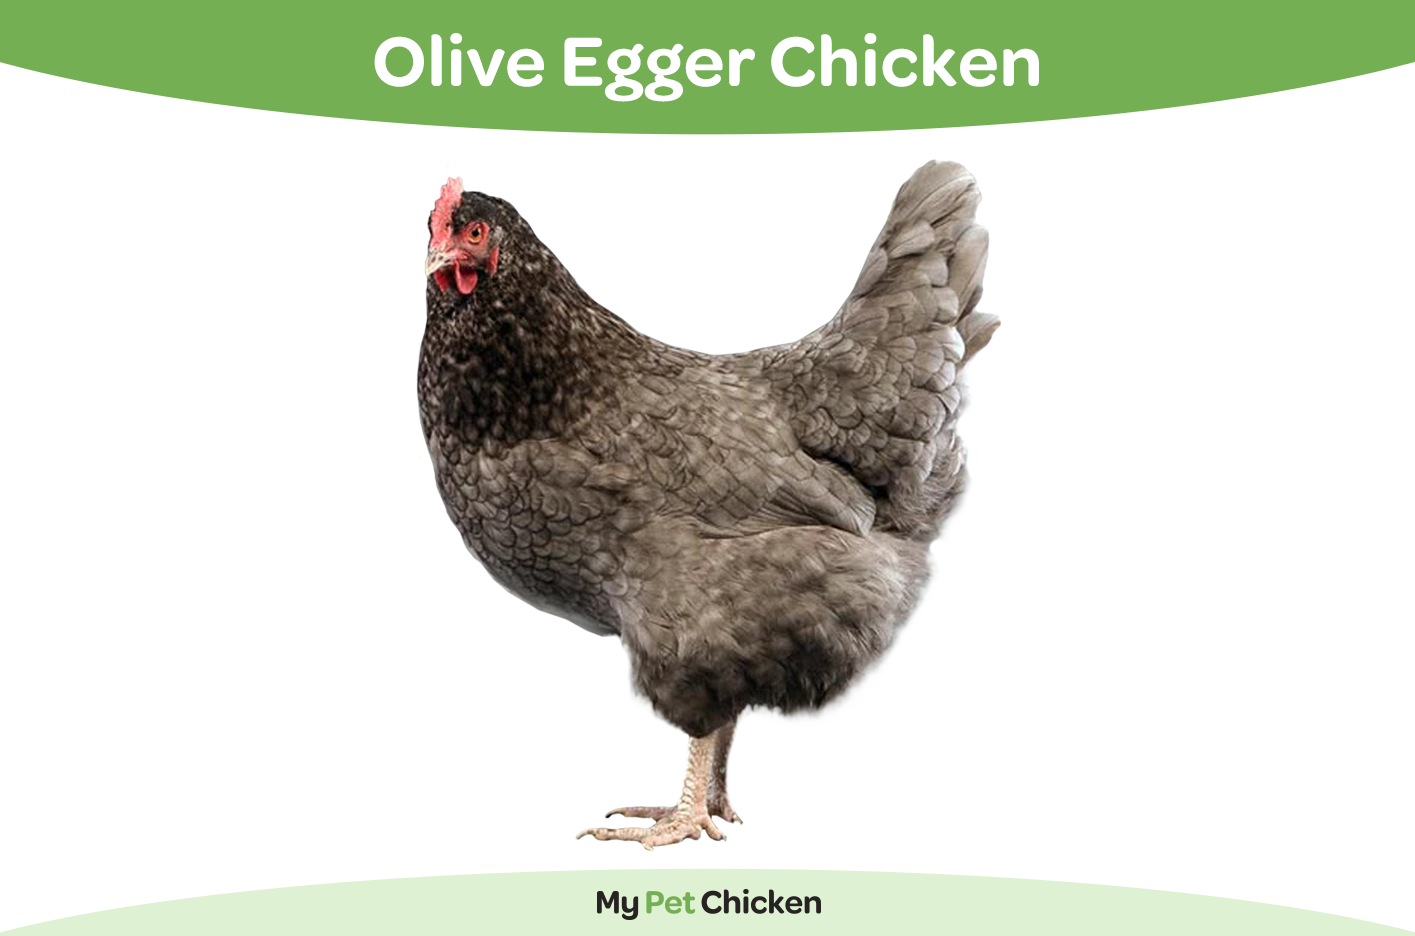 Olive Egger chicken breed